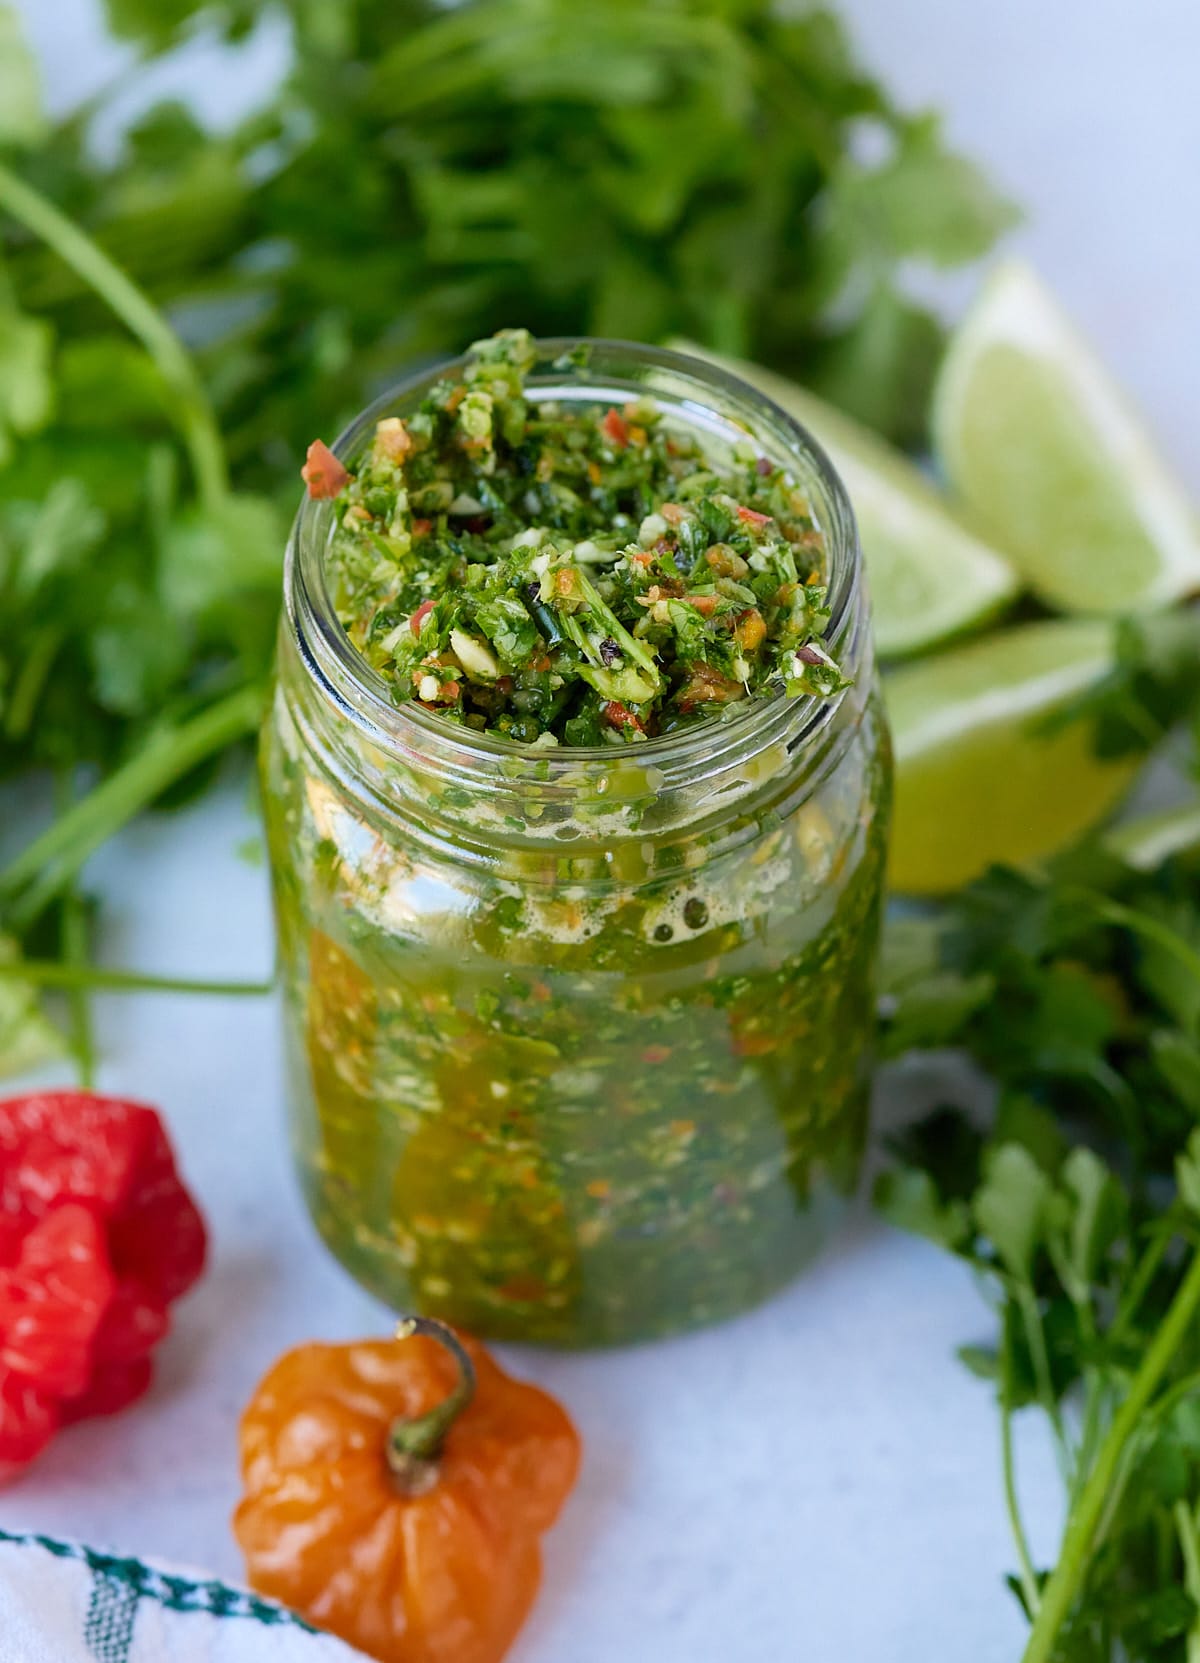 green seasoning in glass jar with herbs surrounding it